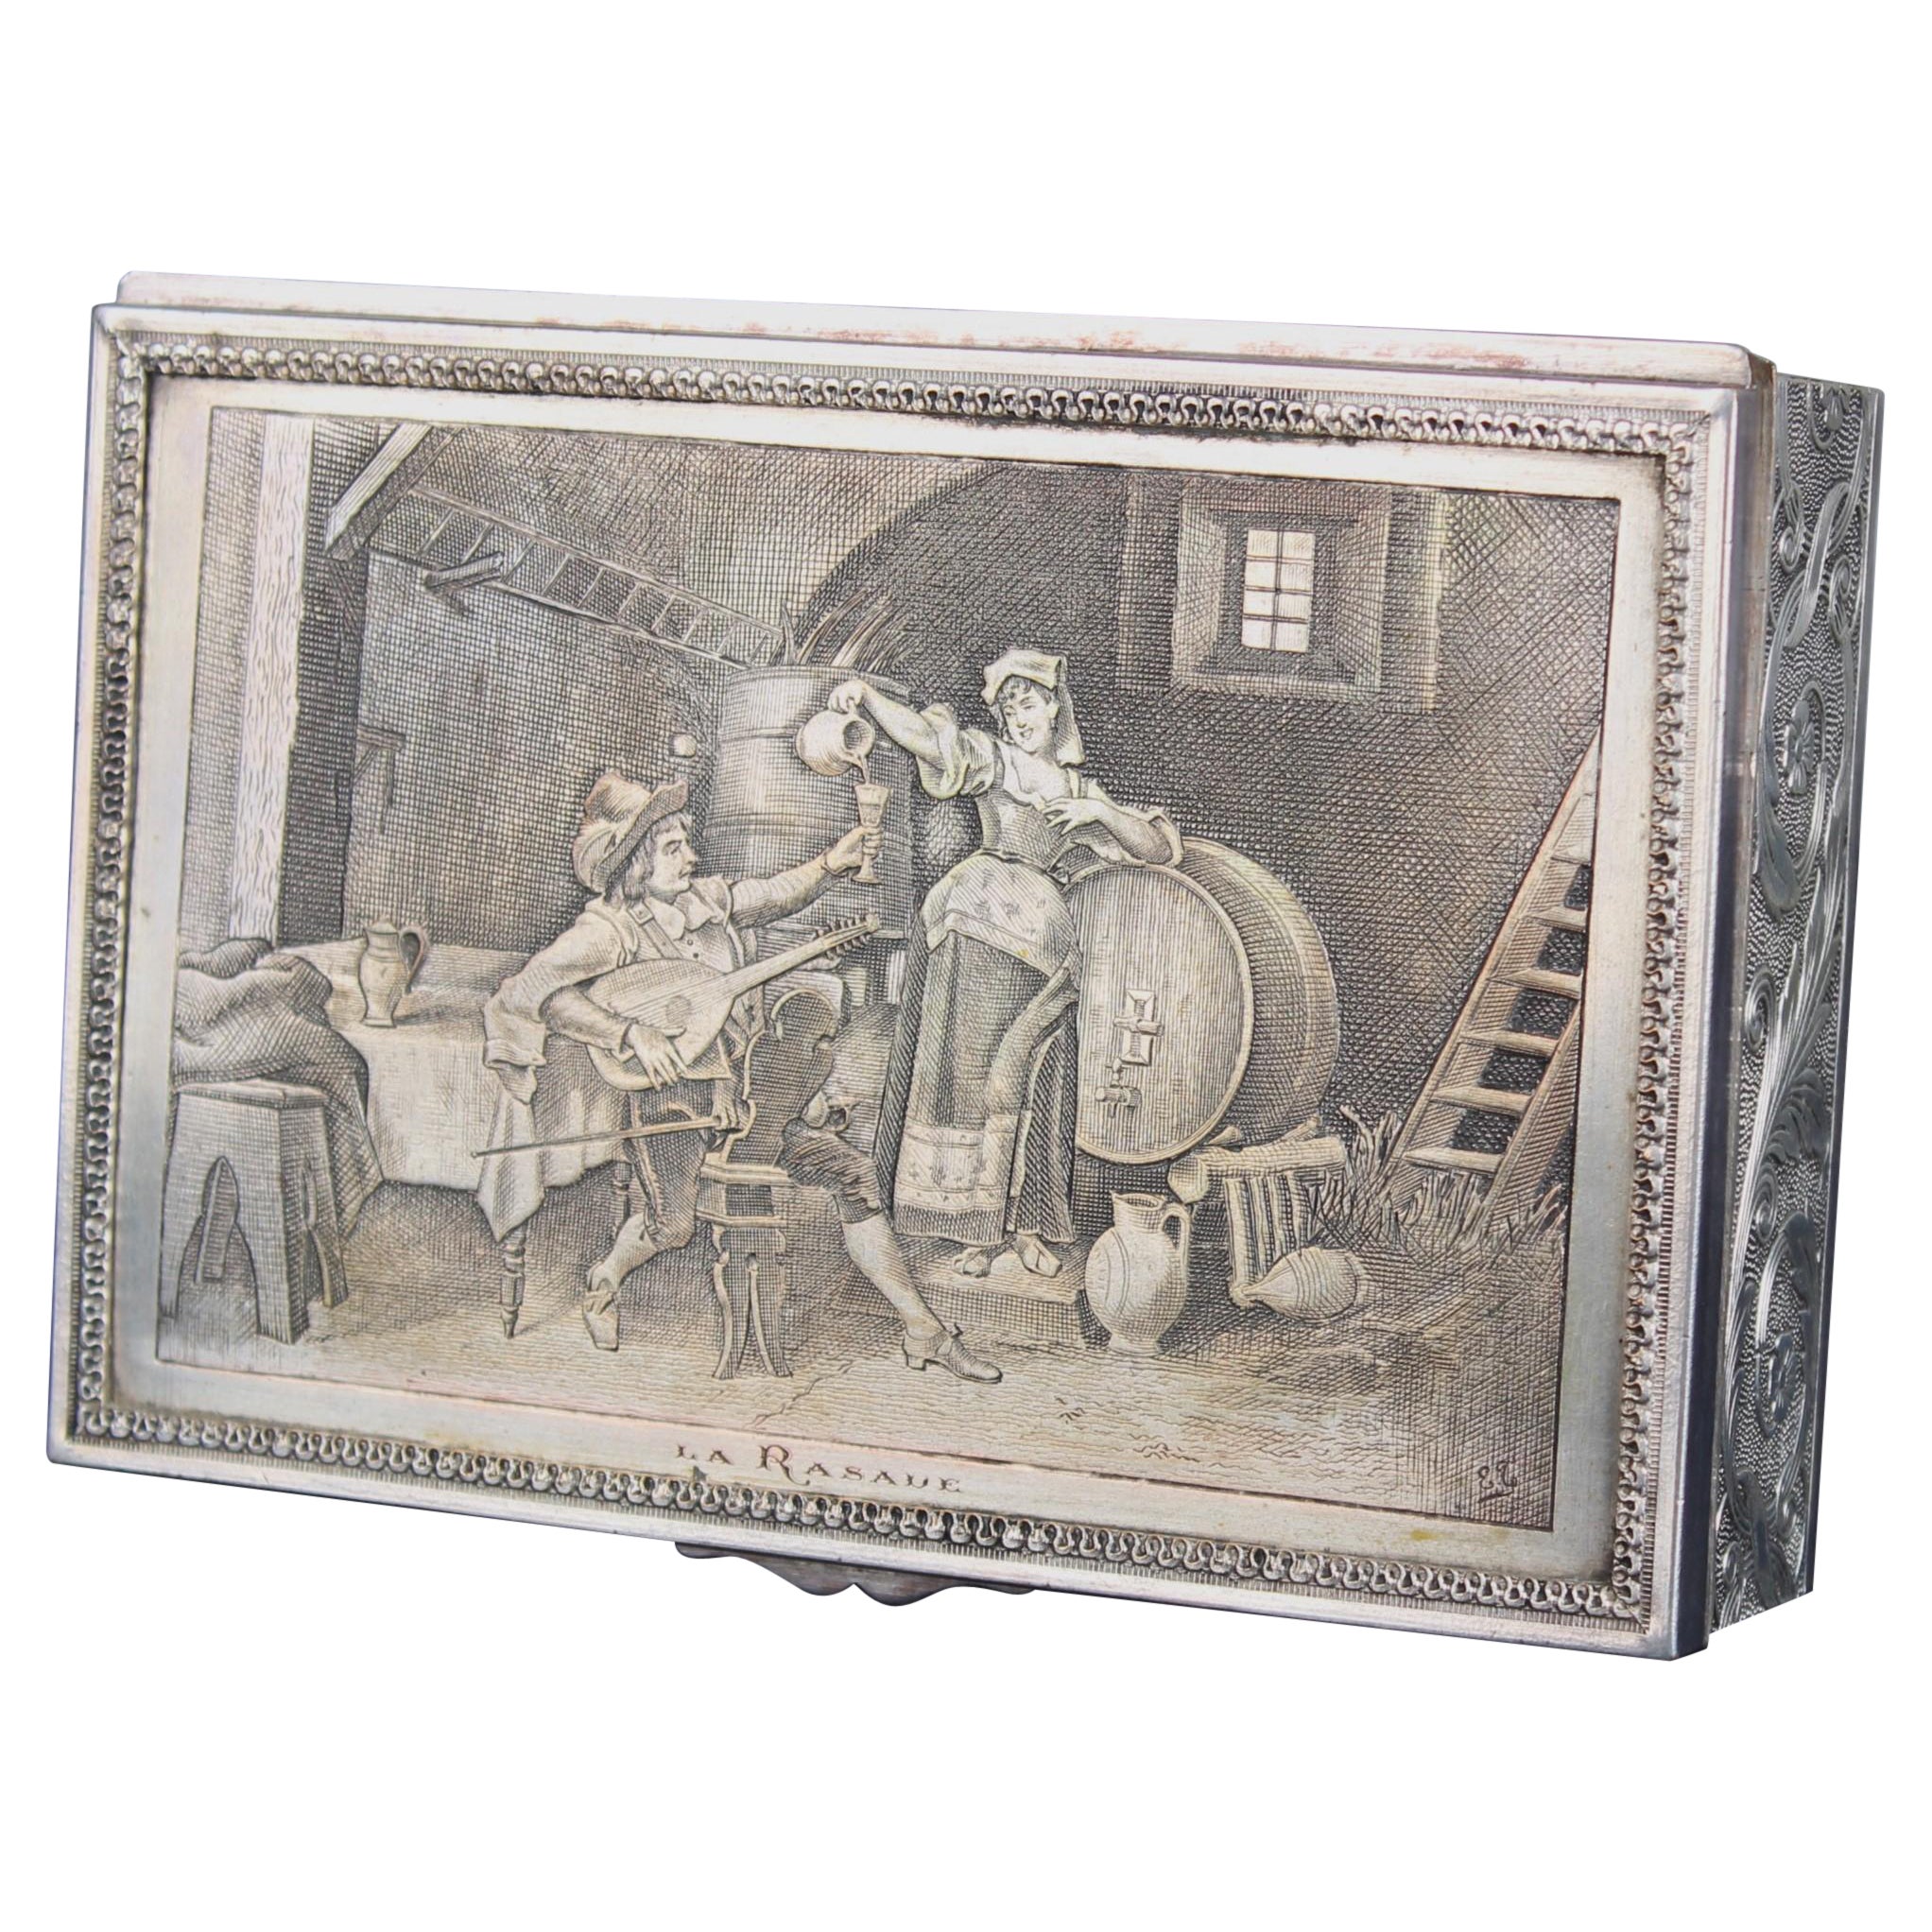 Antique Silvered Jewelry Box, Tavern Scene, France, 1880s